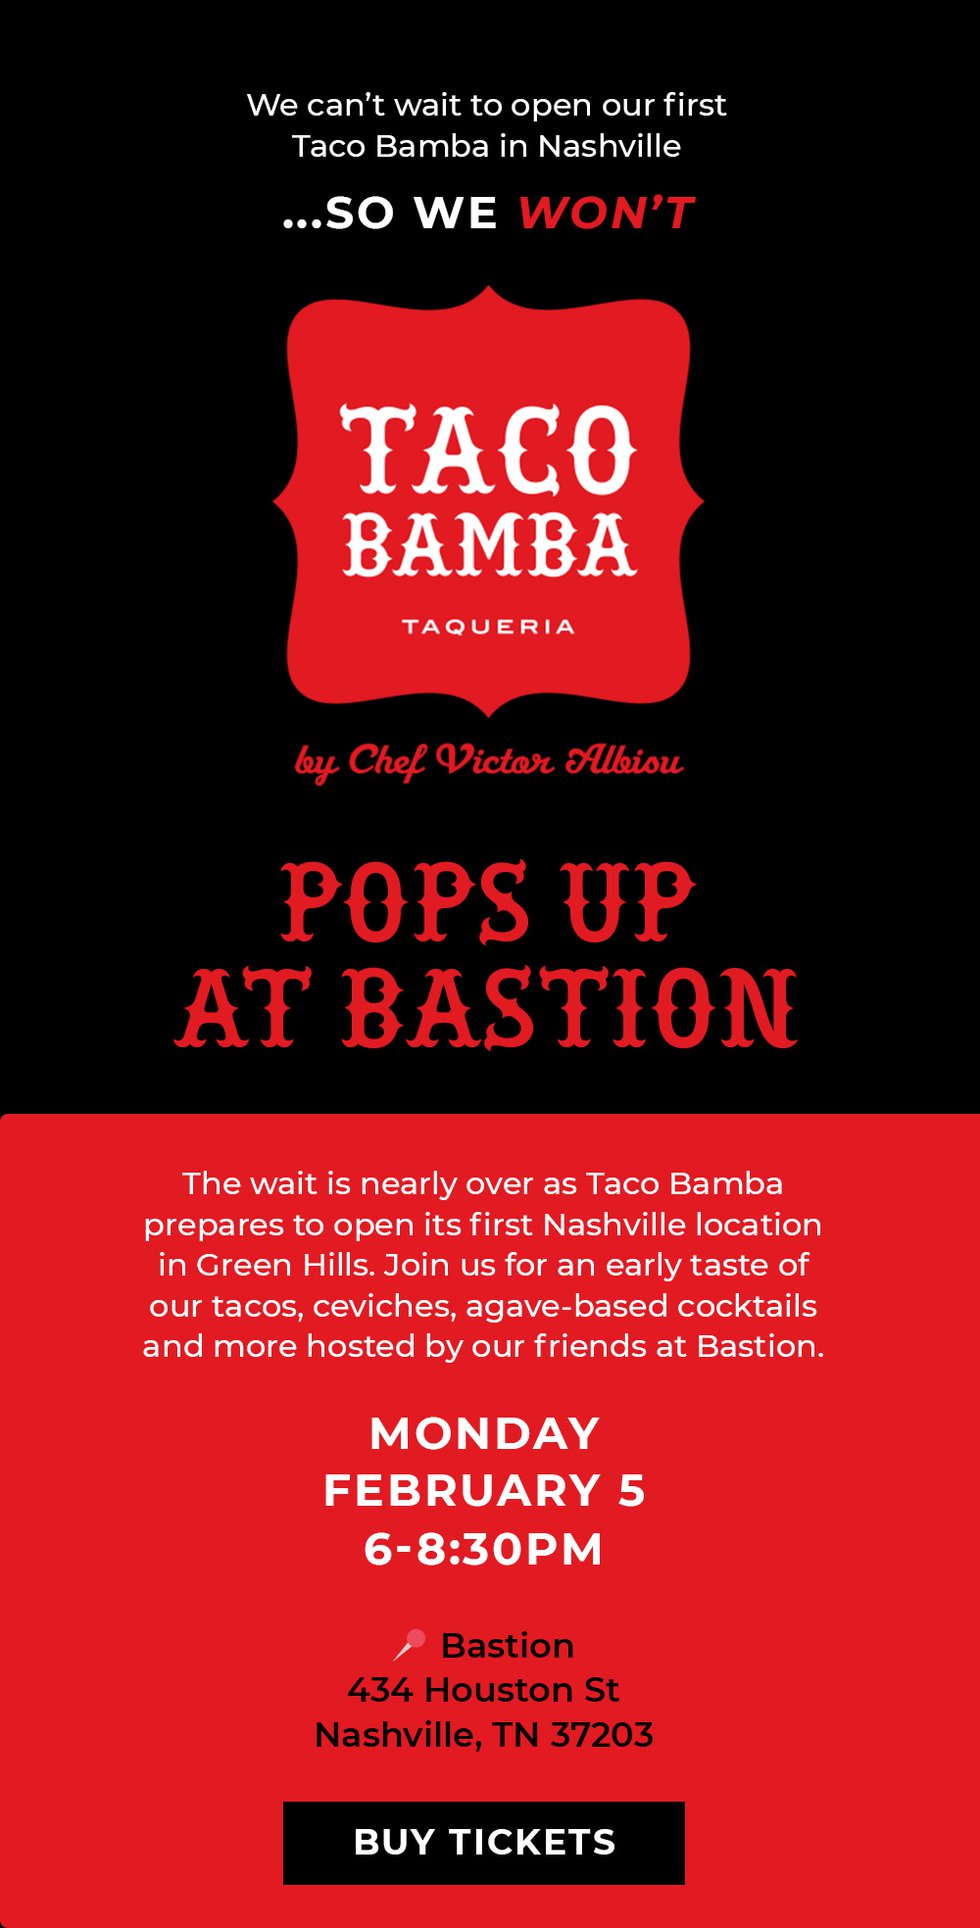 Taco Bamba x Bastion Pop-up Graphic.jpg